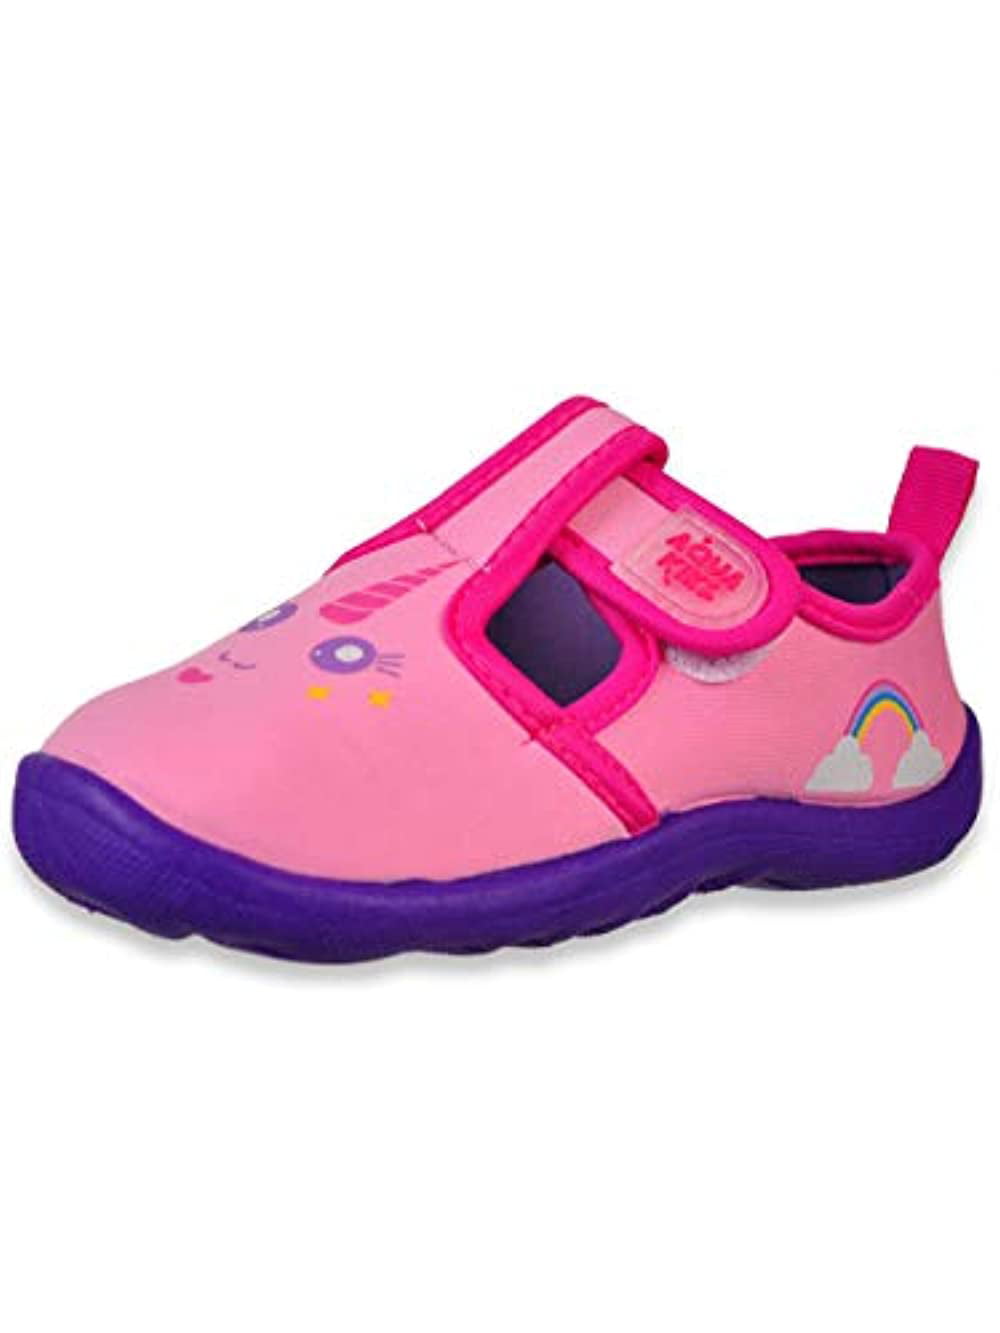 Toddler//Little Kid//Big Kid 2 Pack Non-Slip Quick Dry Waterproof Aqua Shoes Aquakiks Girls Water Shoes